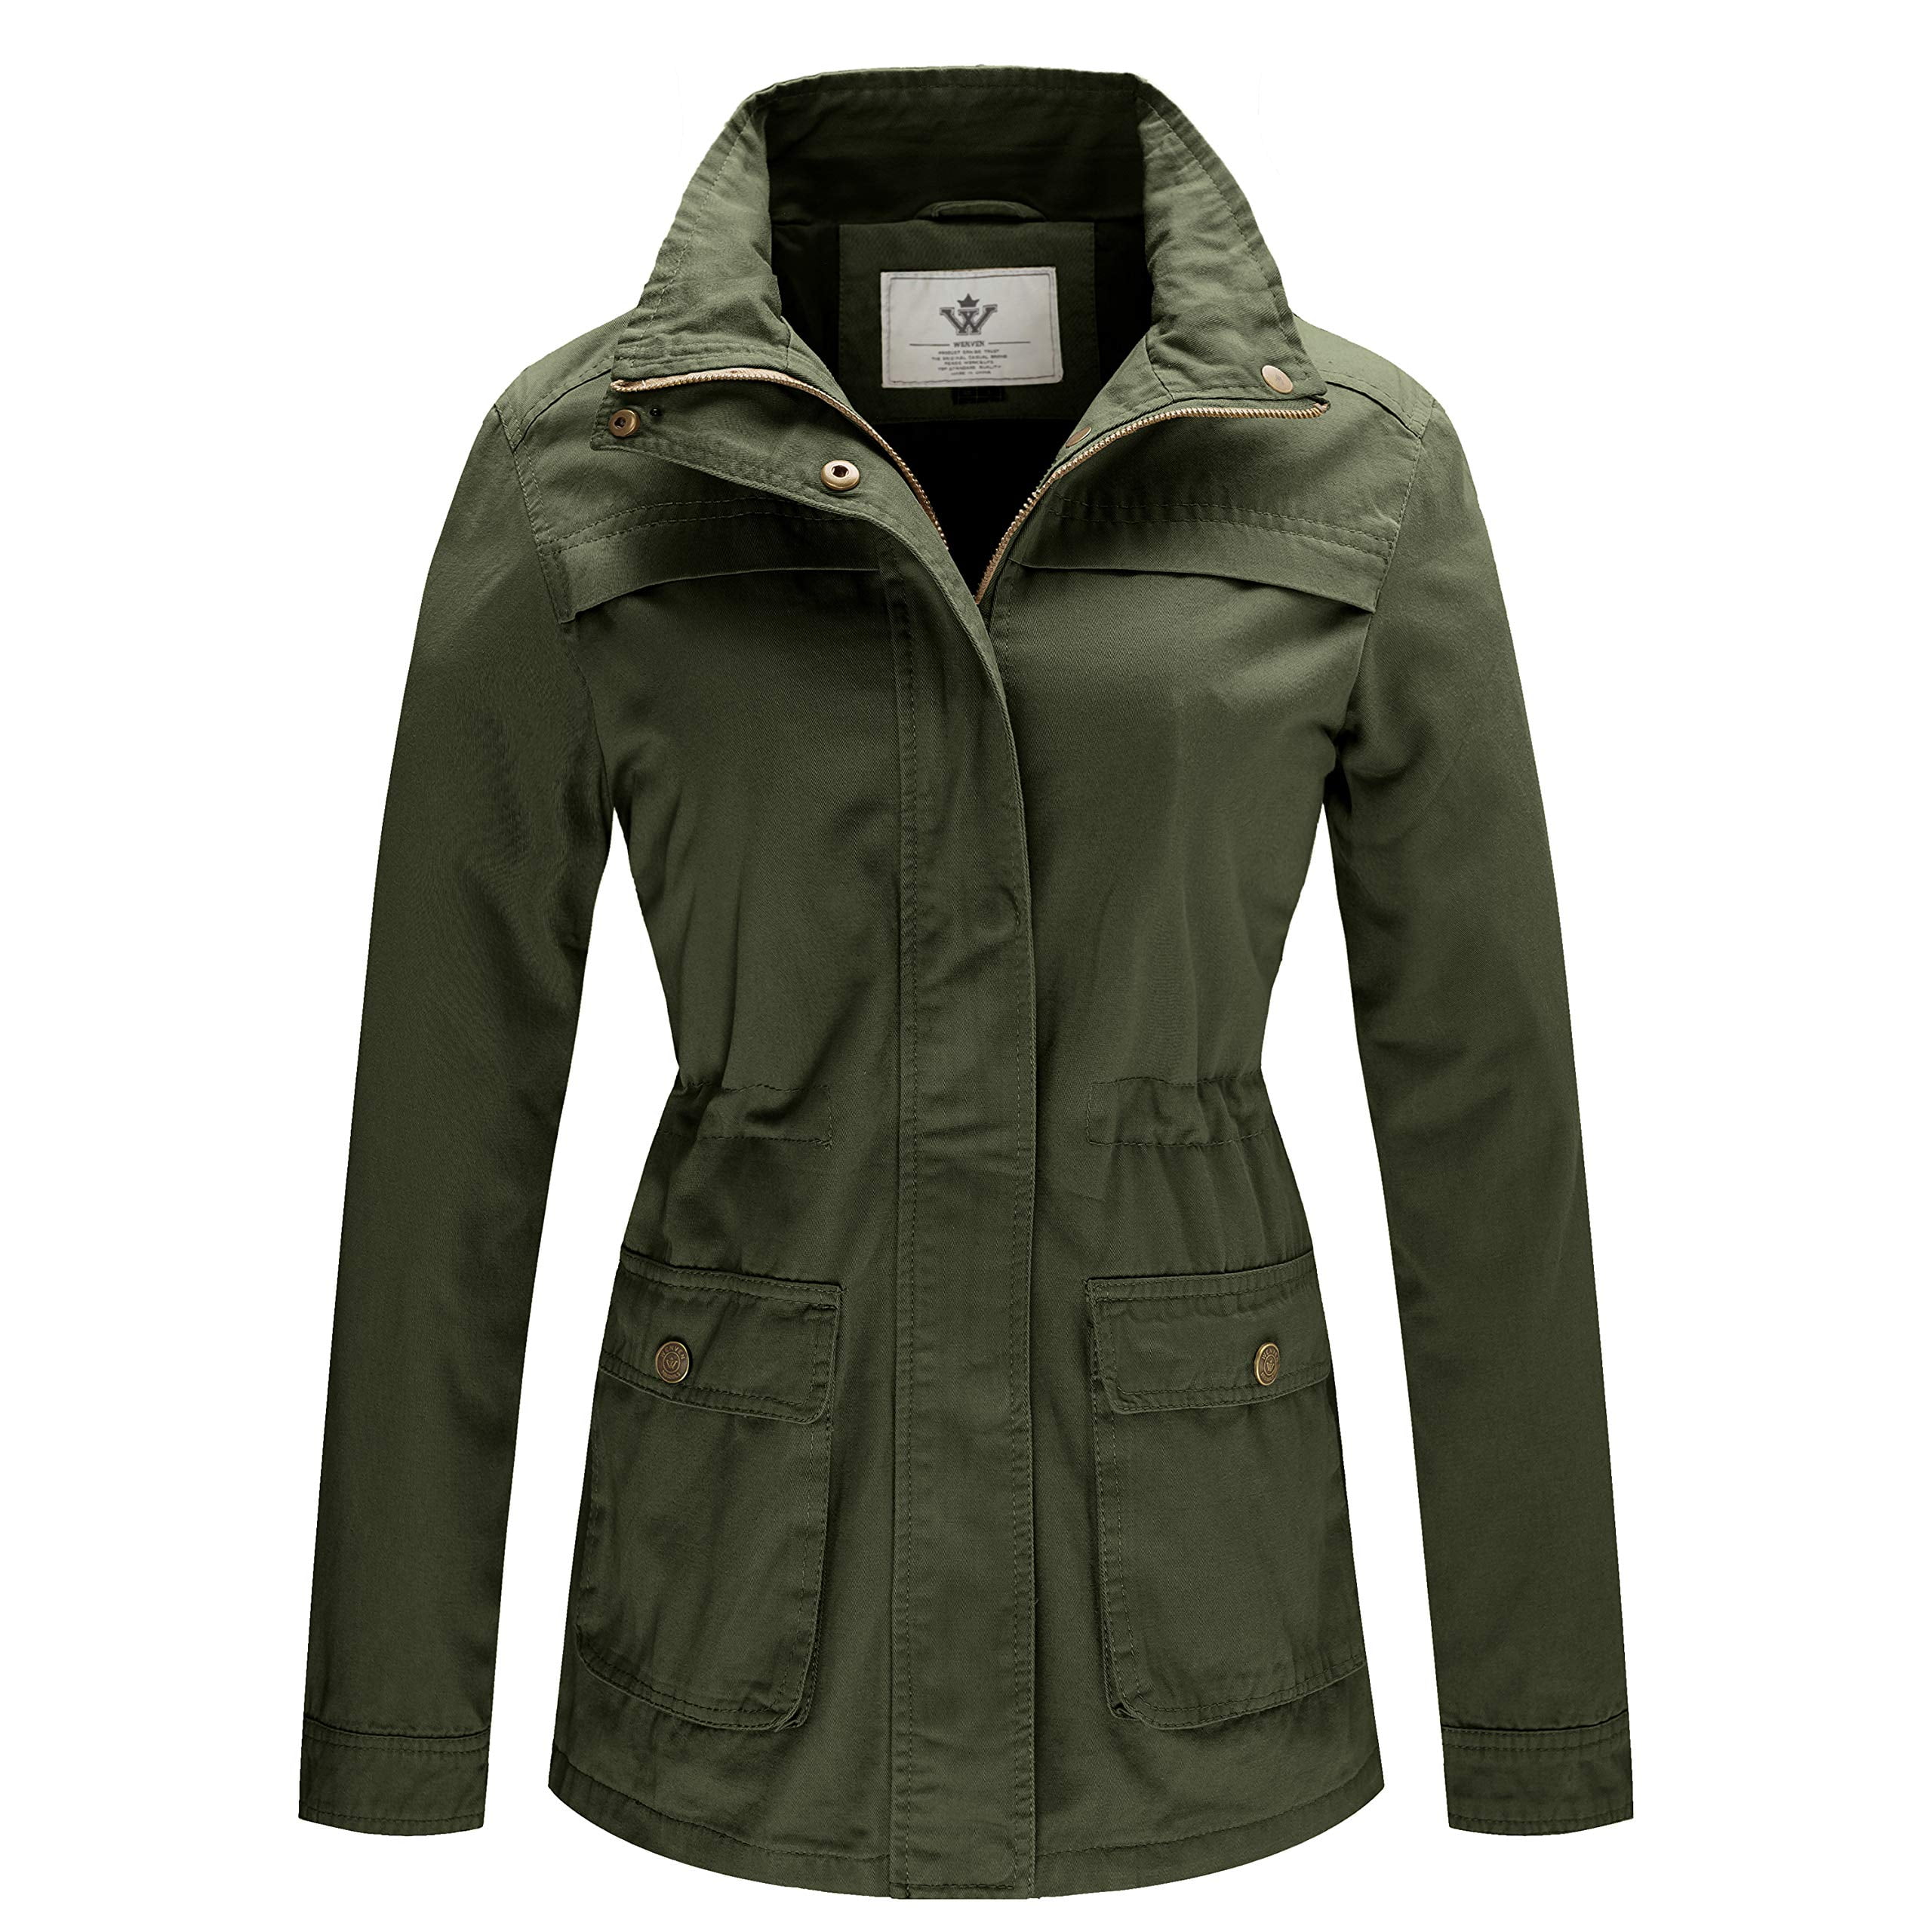 Womens Coats & Jackets | Denim, Bomber & Winter Jackets | Next UK